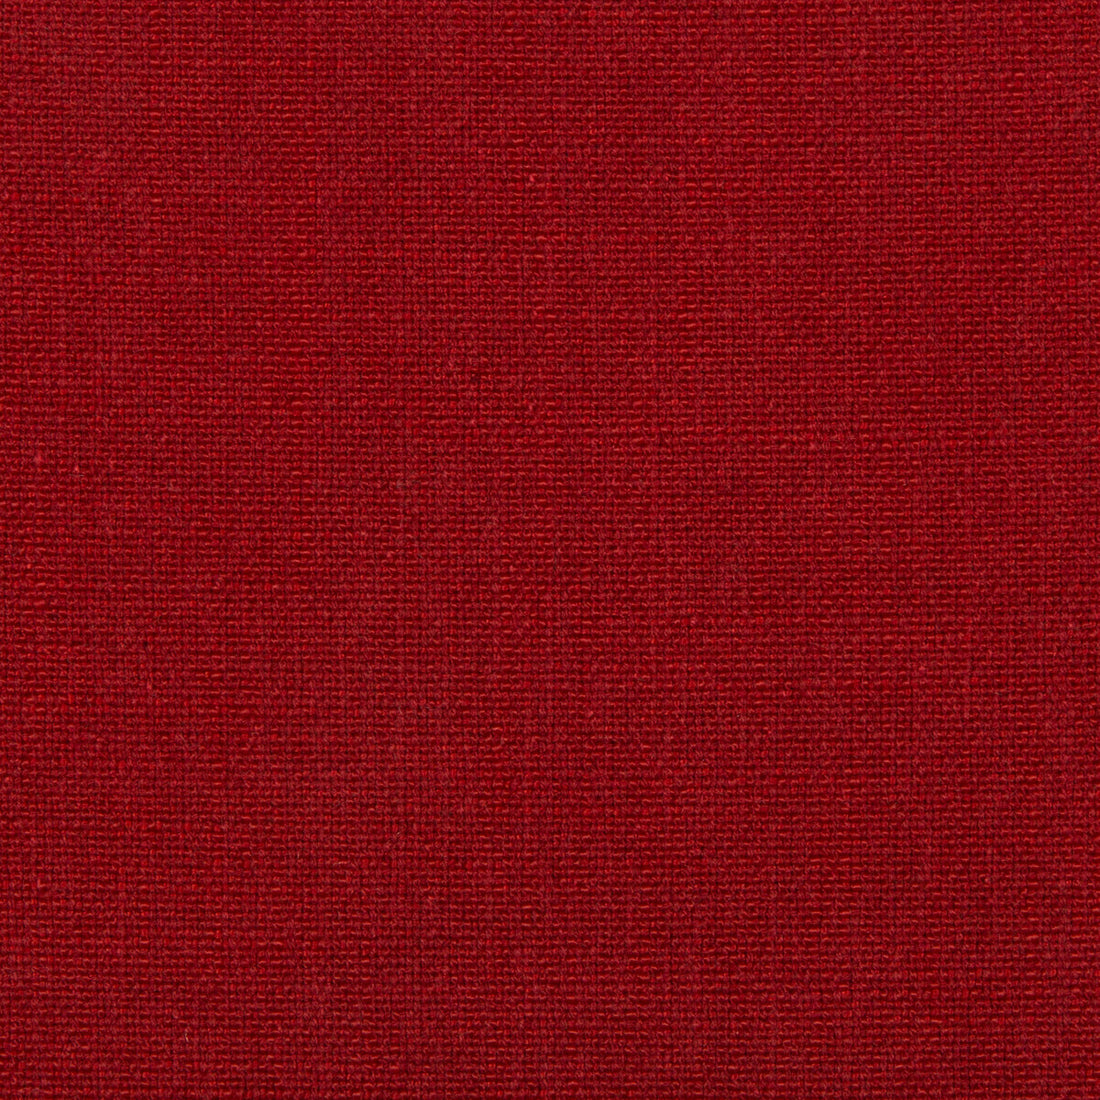 Kravet Smart fabric in 35226-9 color - pattern 35226.9.0 - by Kravet Smart in the Performance Kravetarmor collection